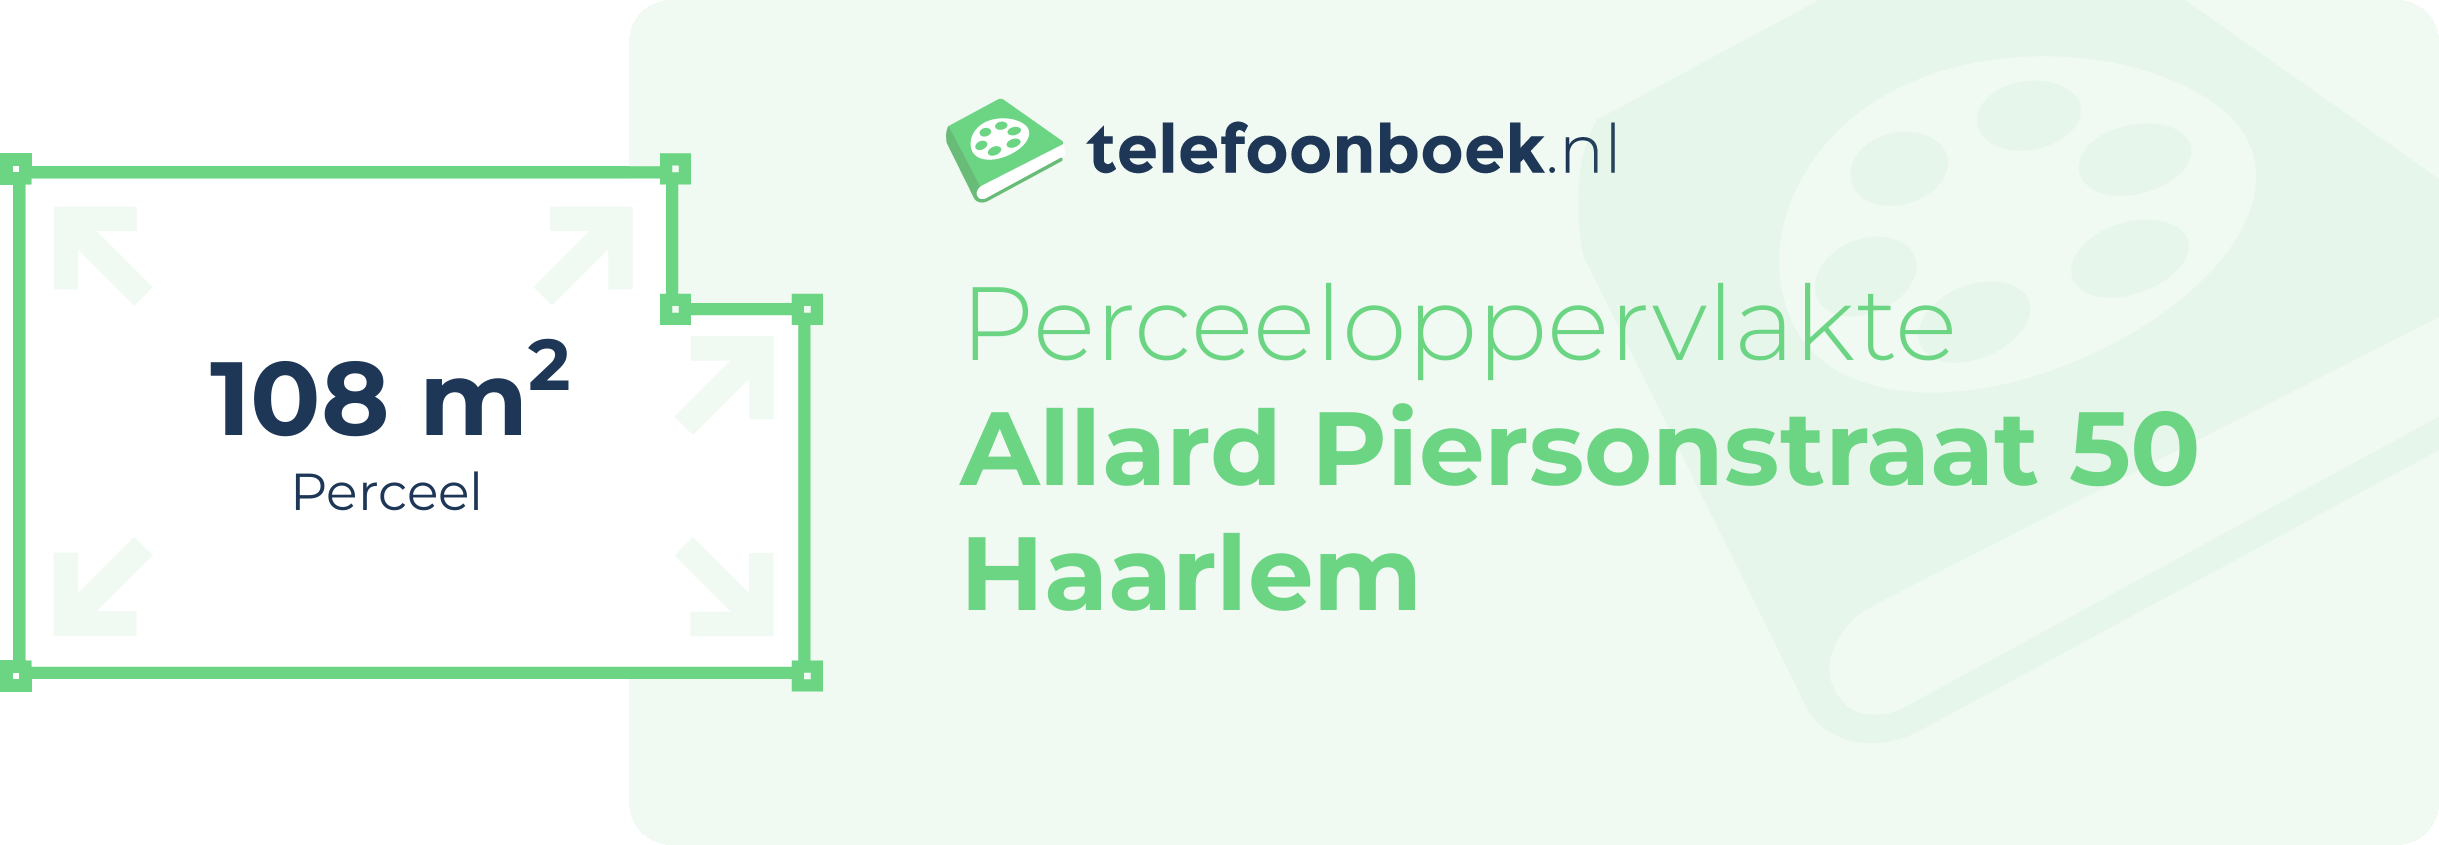 Perceeloppervlakte Allard Piersonstraat 50 Haarlem